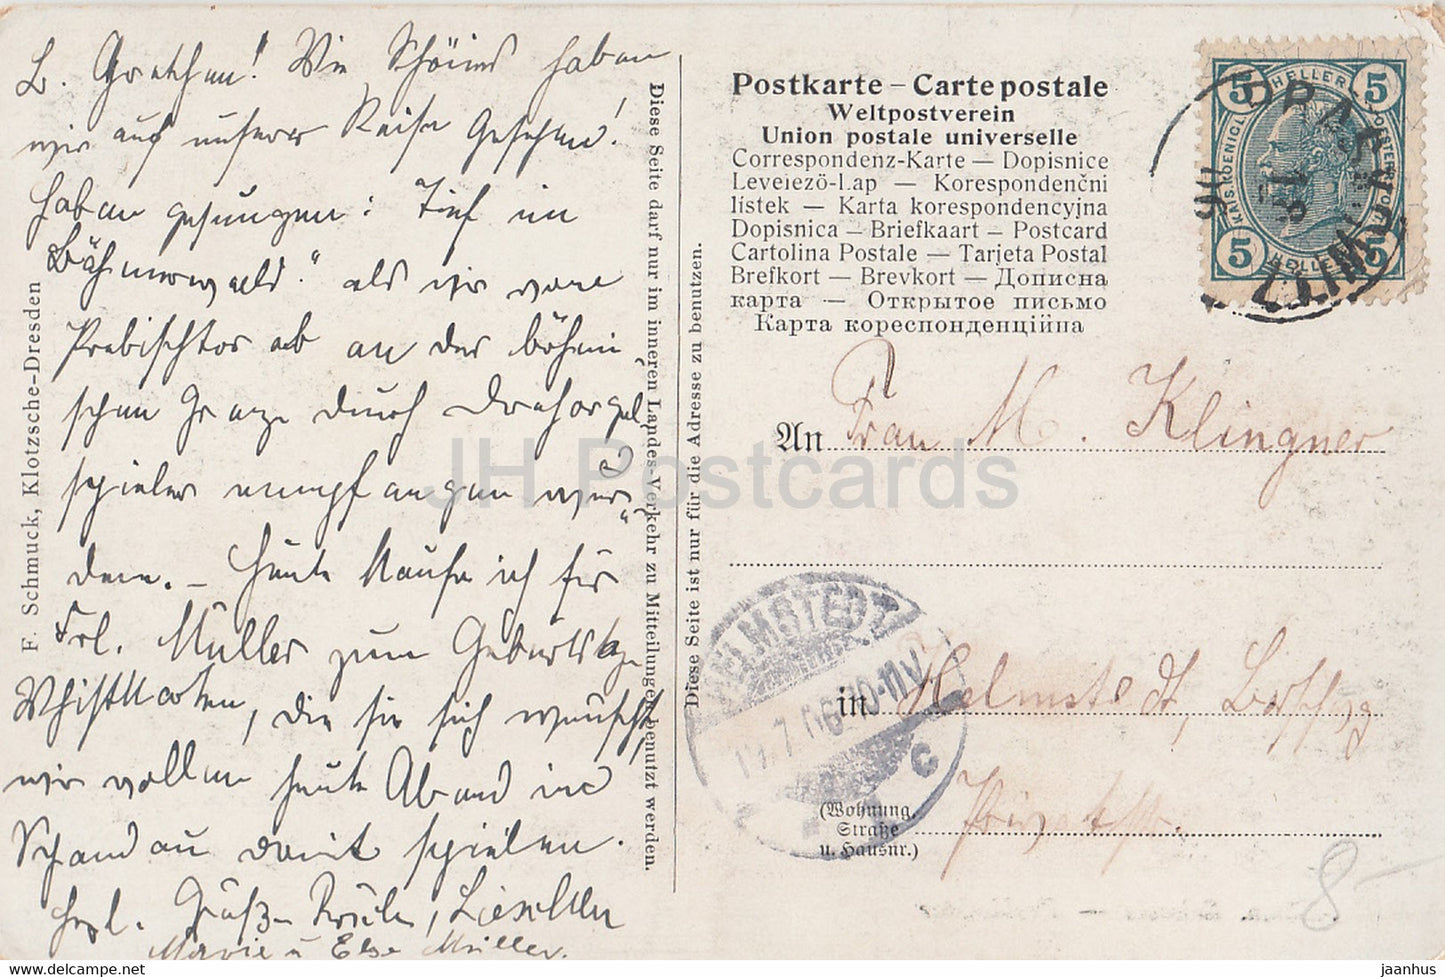 Sachs Bohm - Schweiz - Prebischtor - old postcard - 1906 - Germany - used